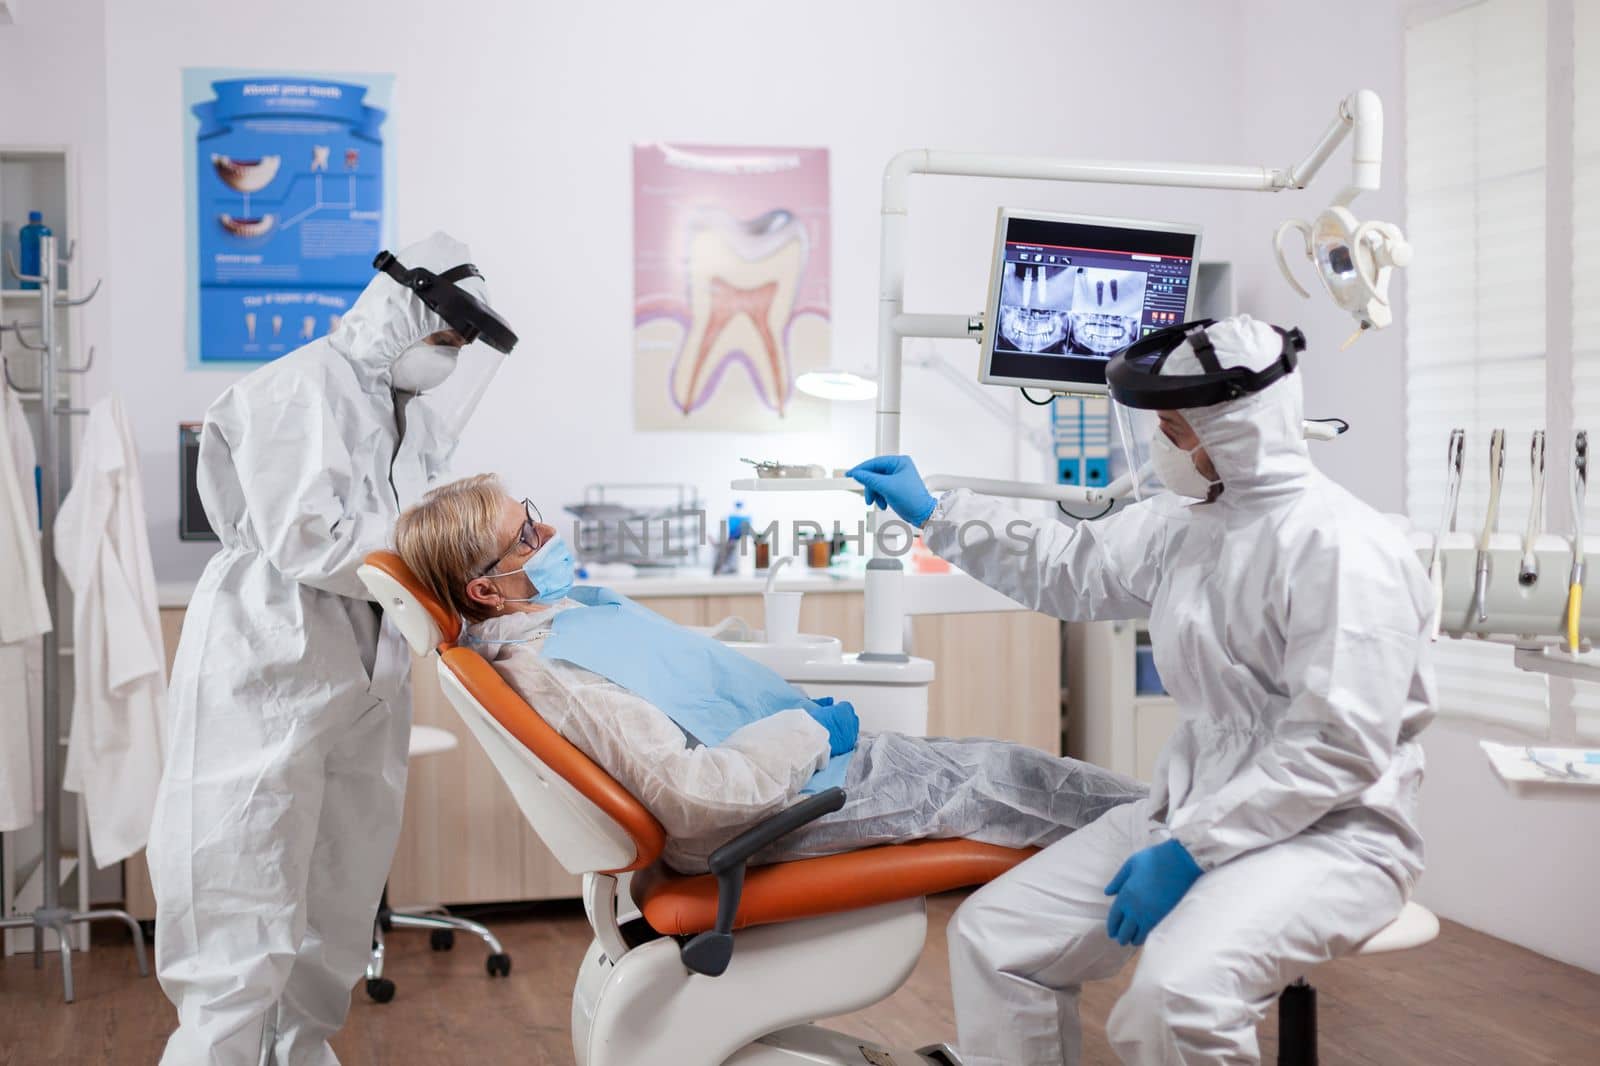 Dentist wearing equipment agasint coronavirus by DCStudio